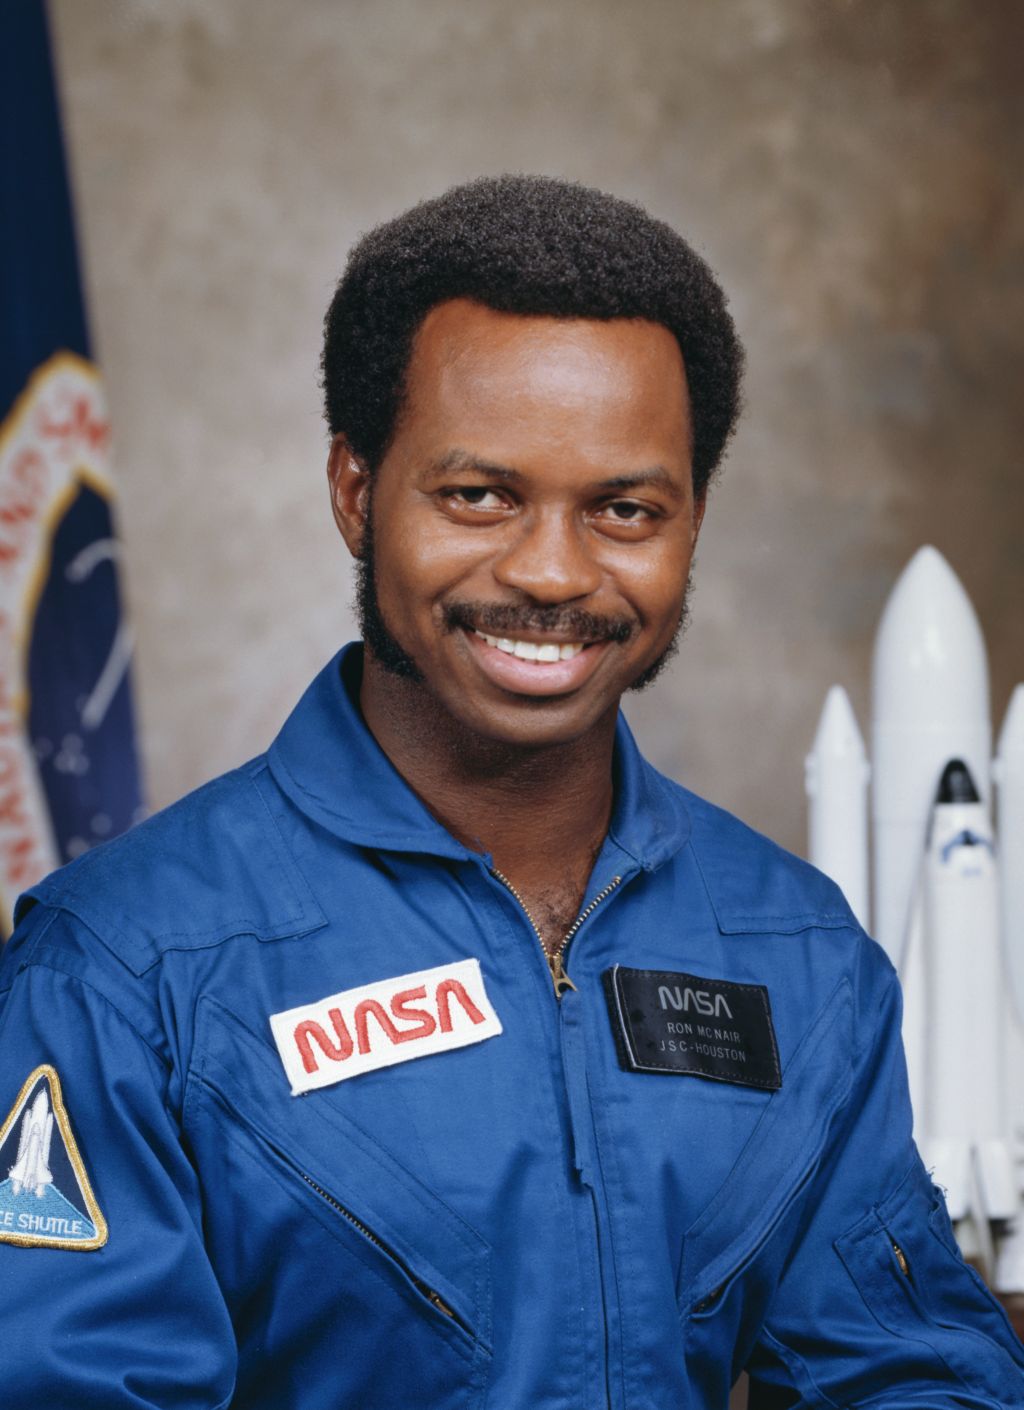 Portrait of Astronaut Ronald E. McNair in Uniform